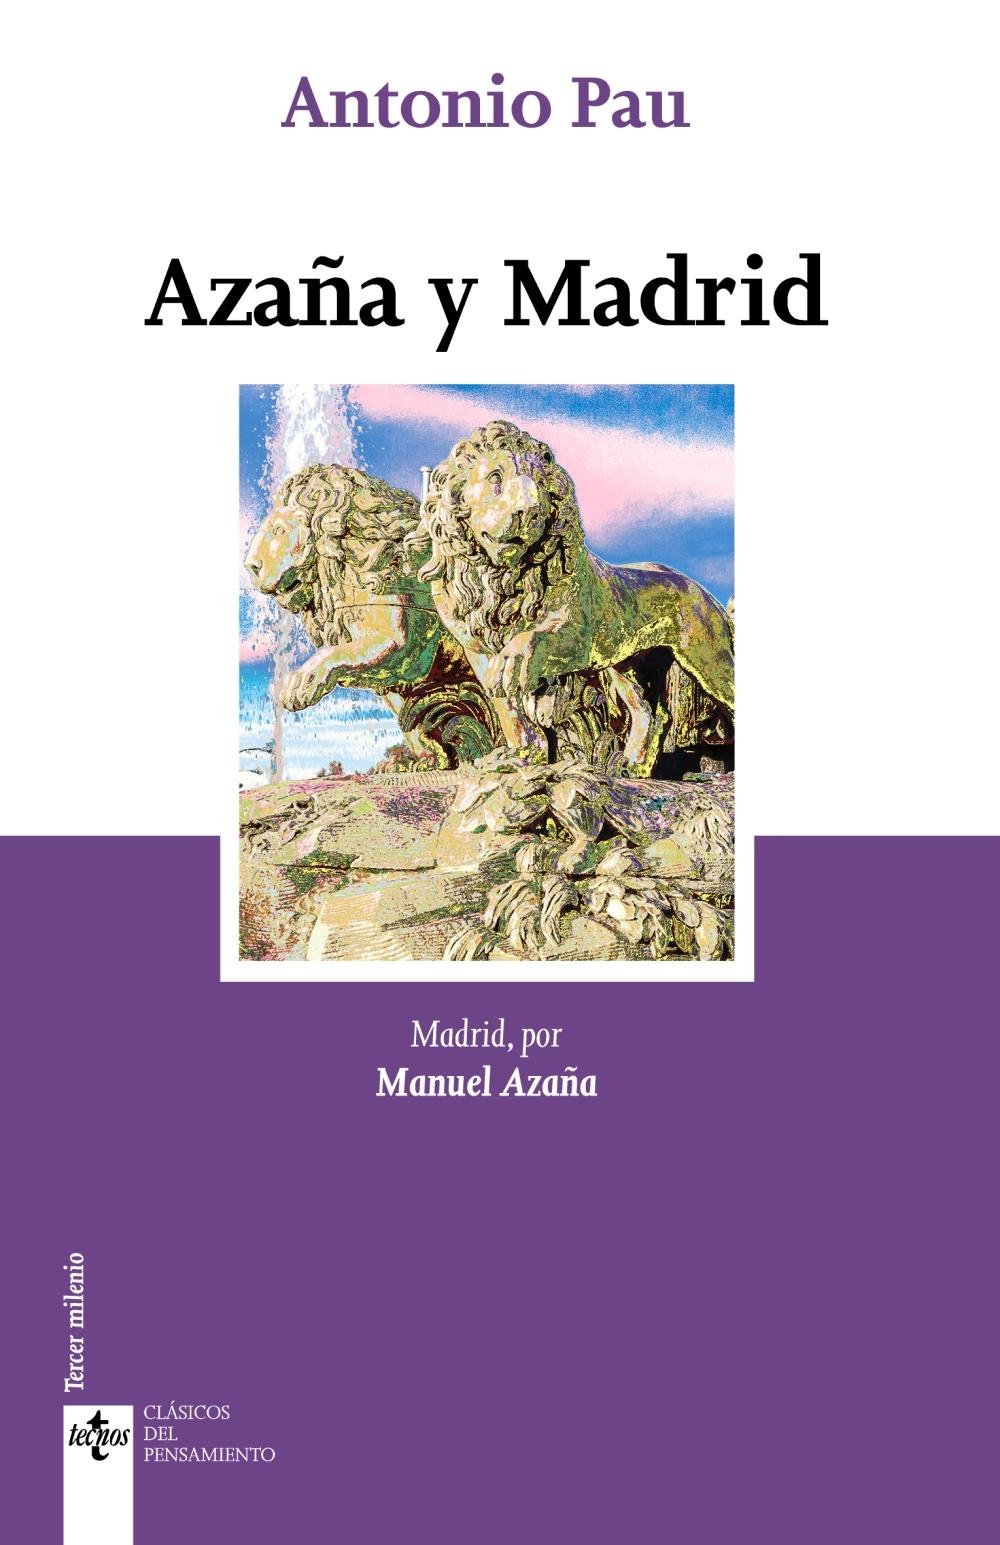 Azaña y Madrid "Madrid, por Manuel Azaña"